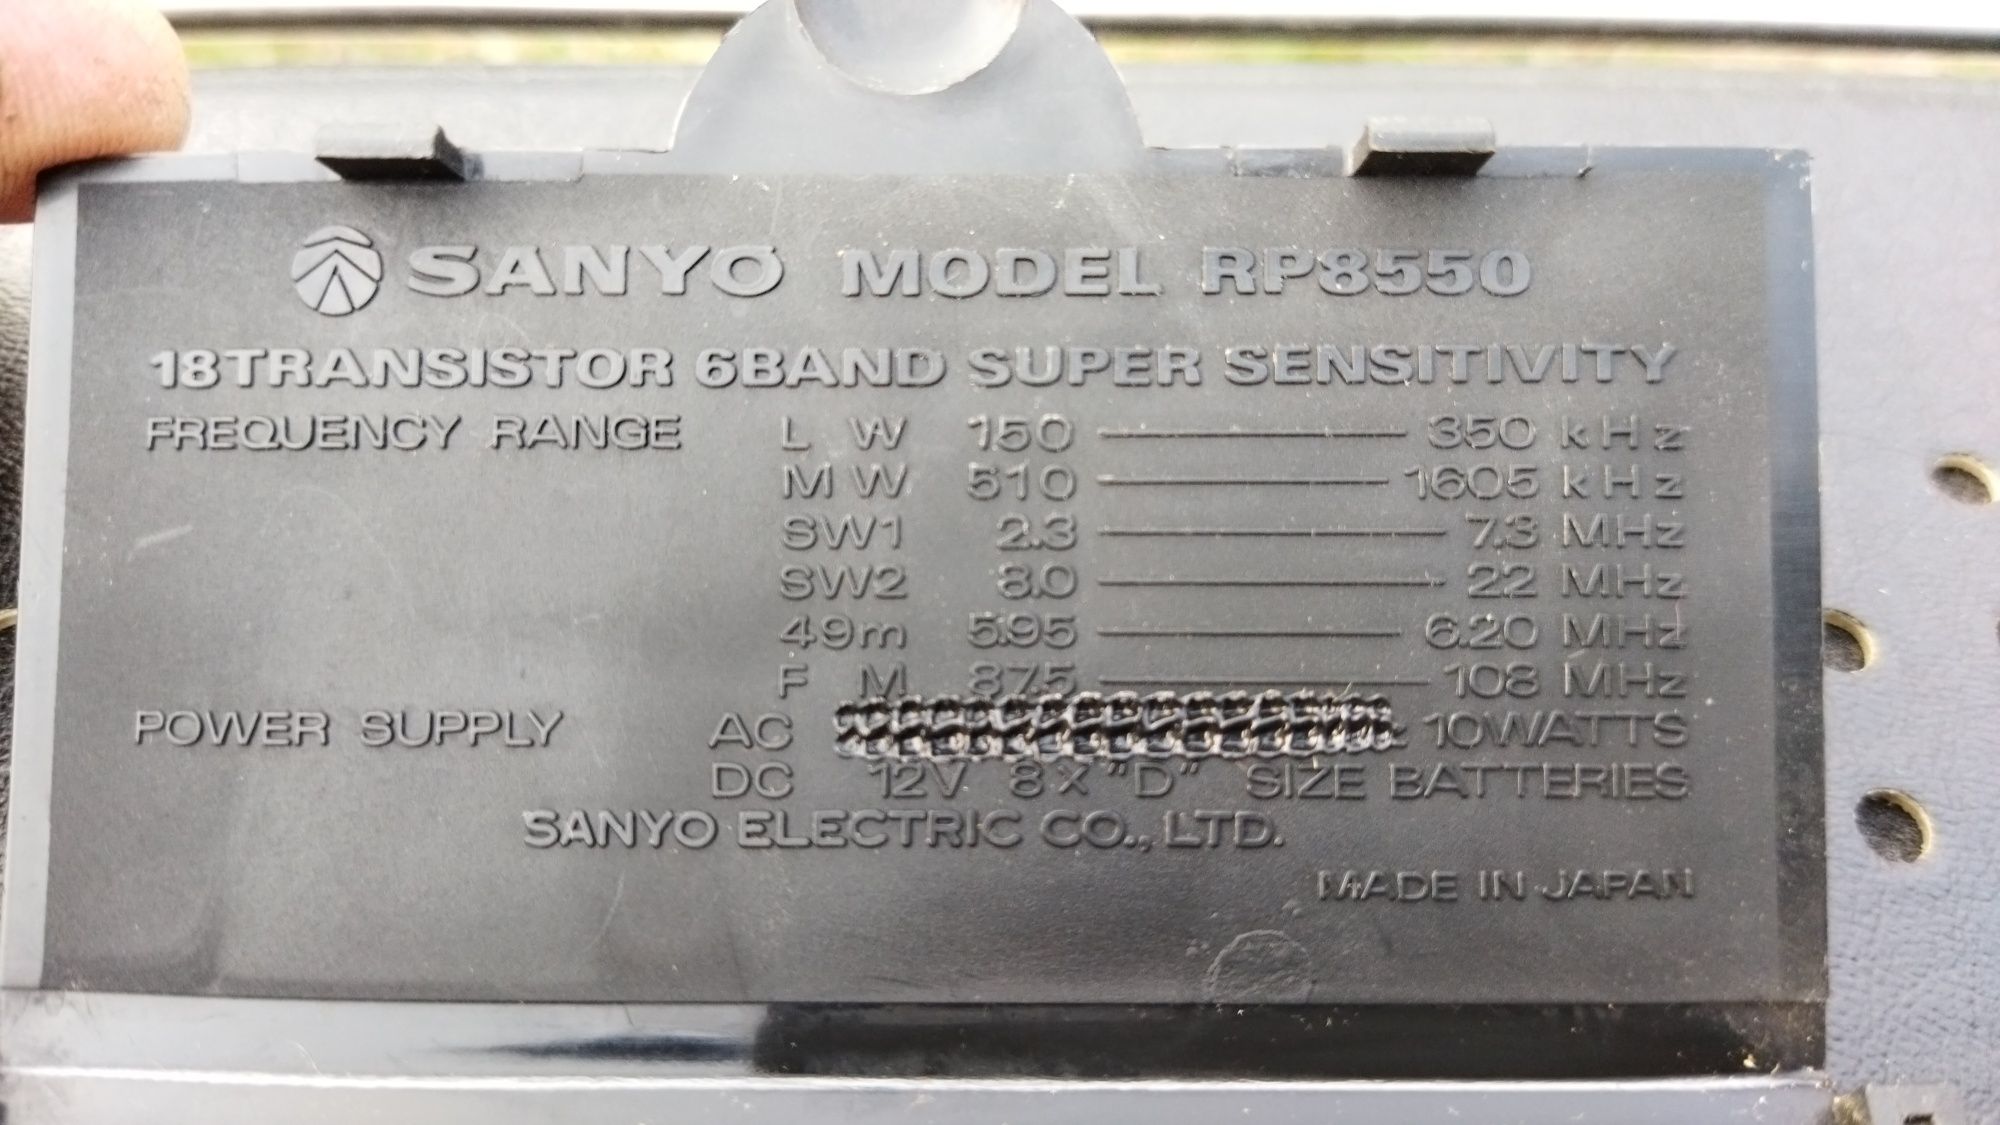 Sanyo RP 8550 world receiver